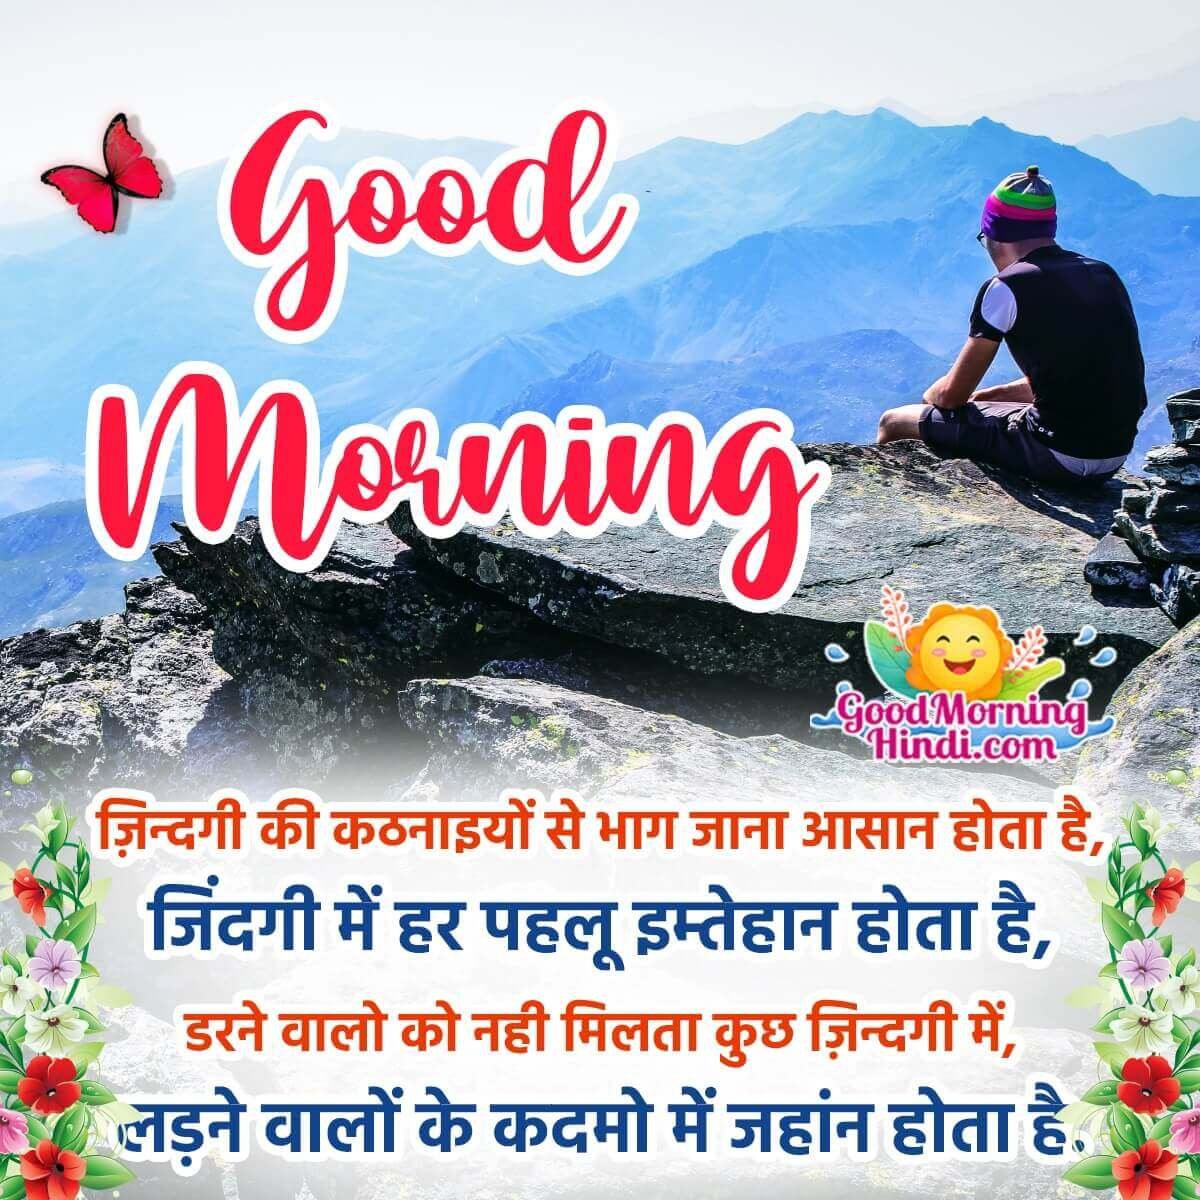 Good Morning Hindi Wishes - Good Morning Wishes & Images In Hindi